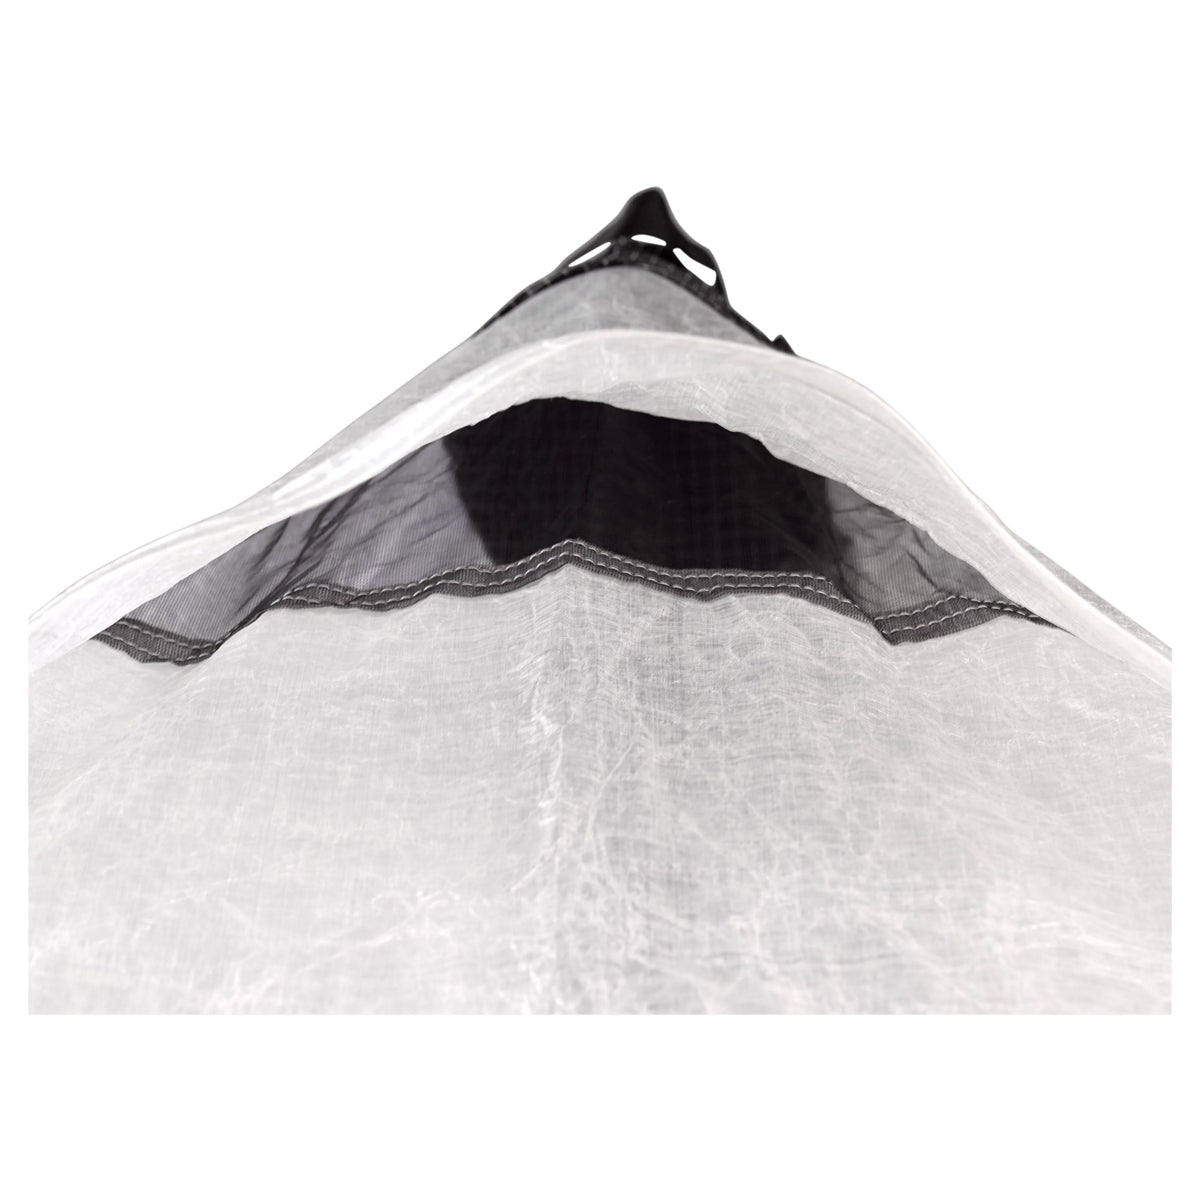 Hyperlite Mountain Gear UltaMid 2 - Ultralight Pyramid Tent in  by GOHUNT | Hyperlite Mountain Gear - GOHUNT Shop